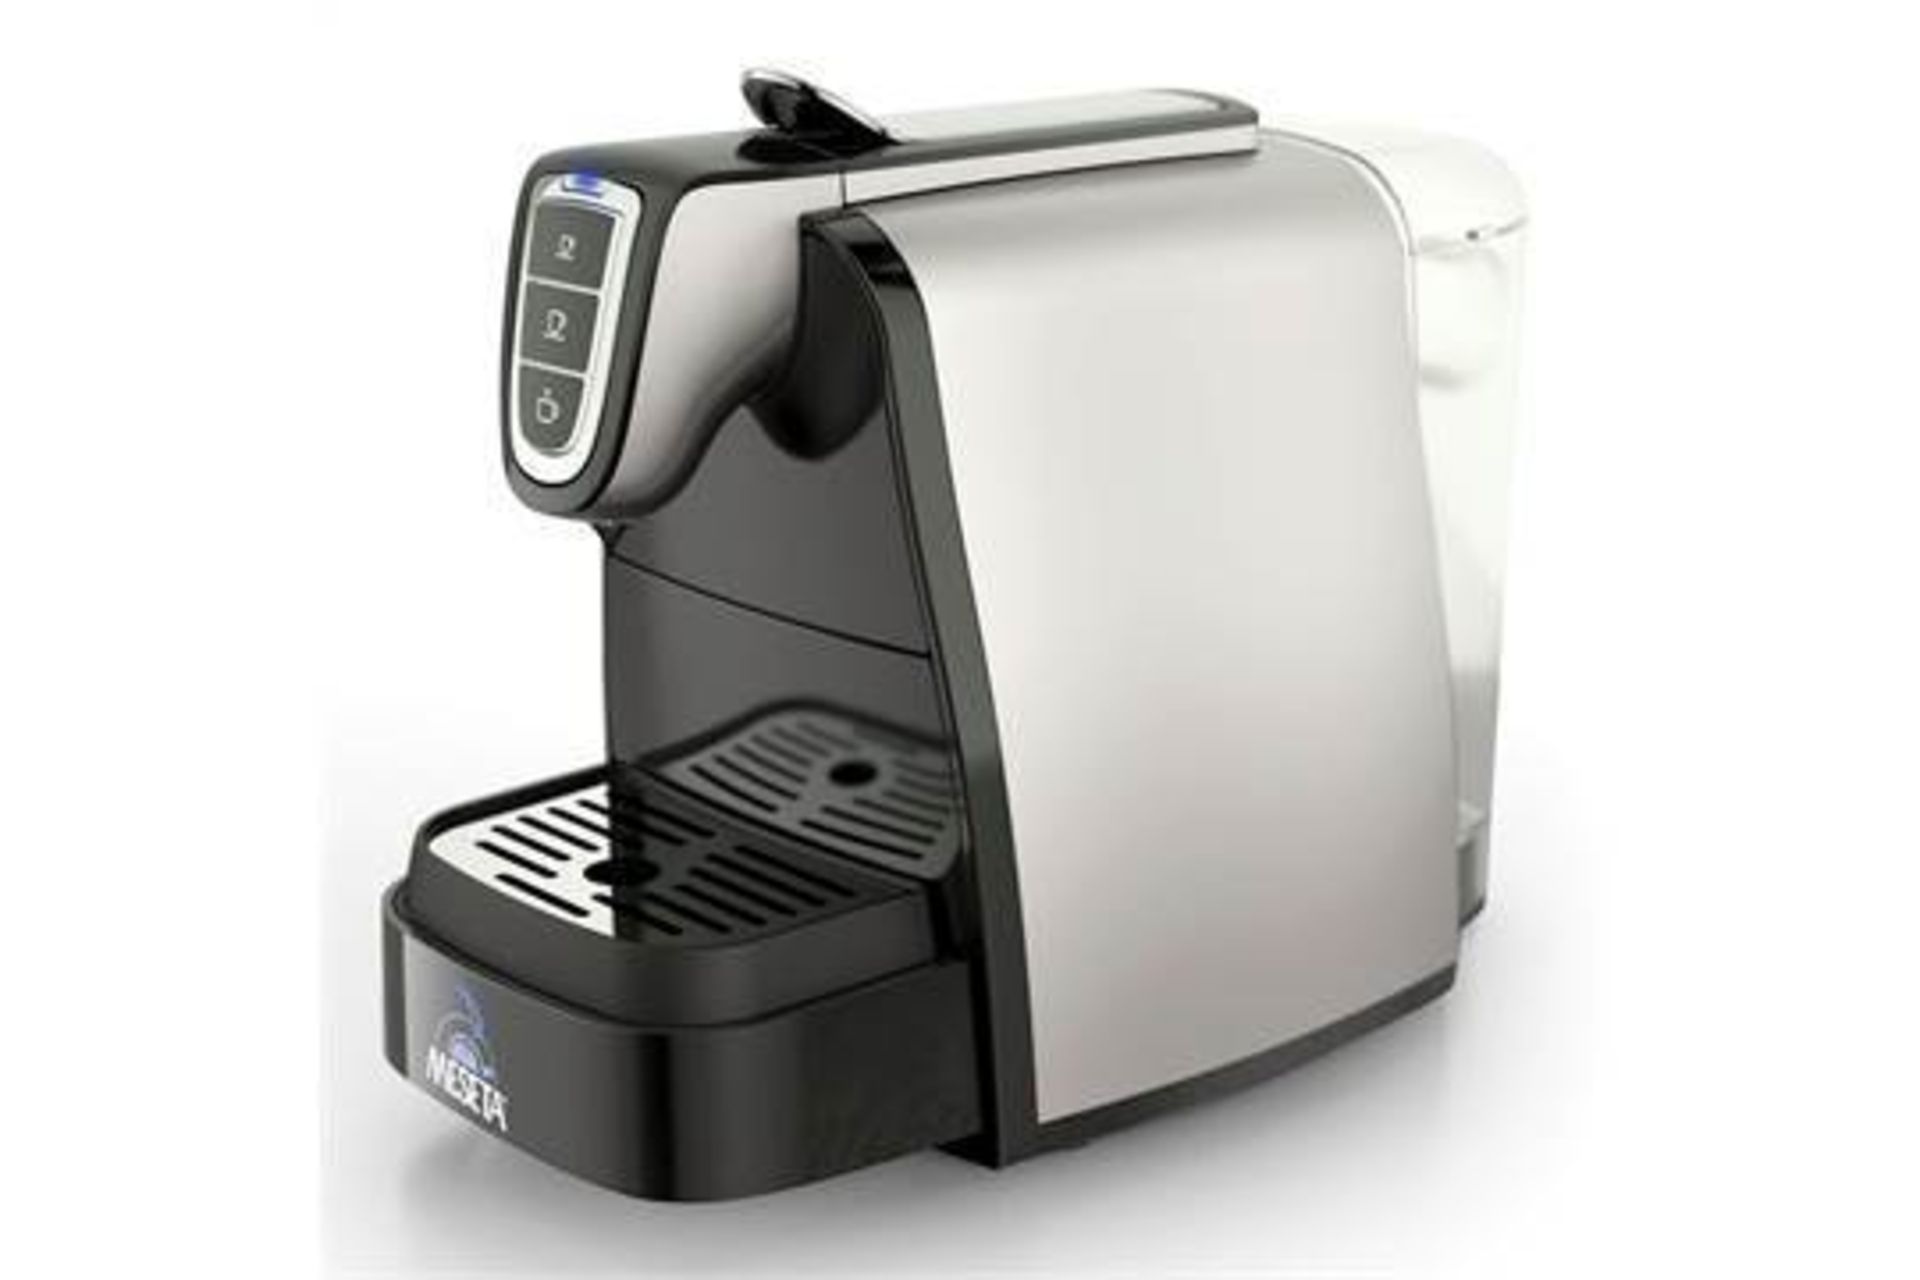 * New & Boxed Meseta Capsule Coffee Machine (part cancelled order); Italian Design; Built in Waste